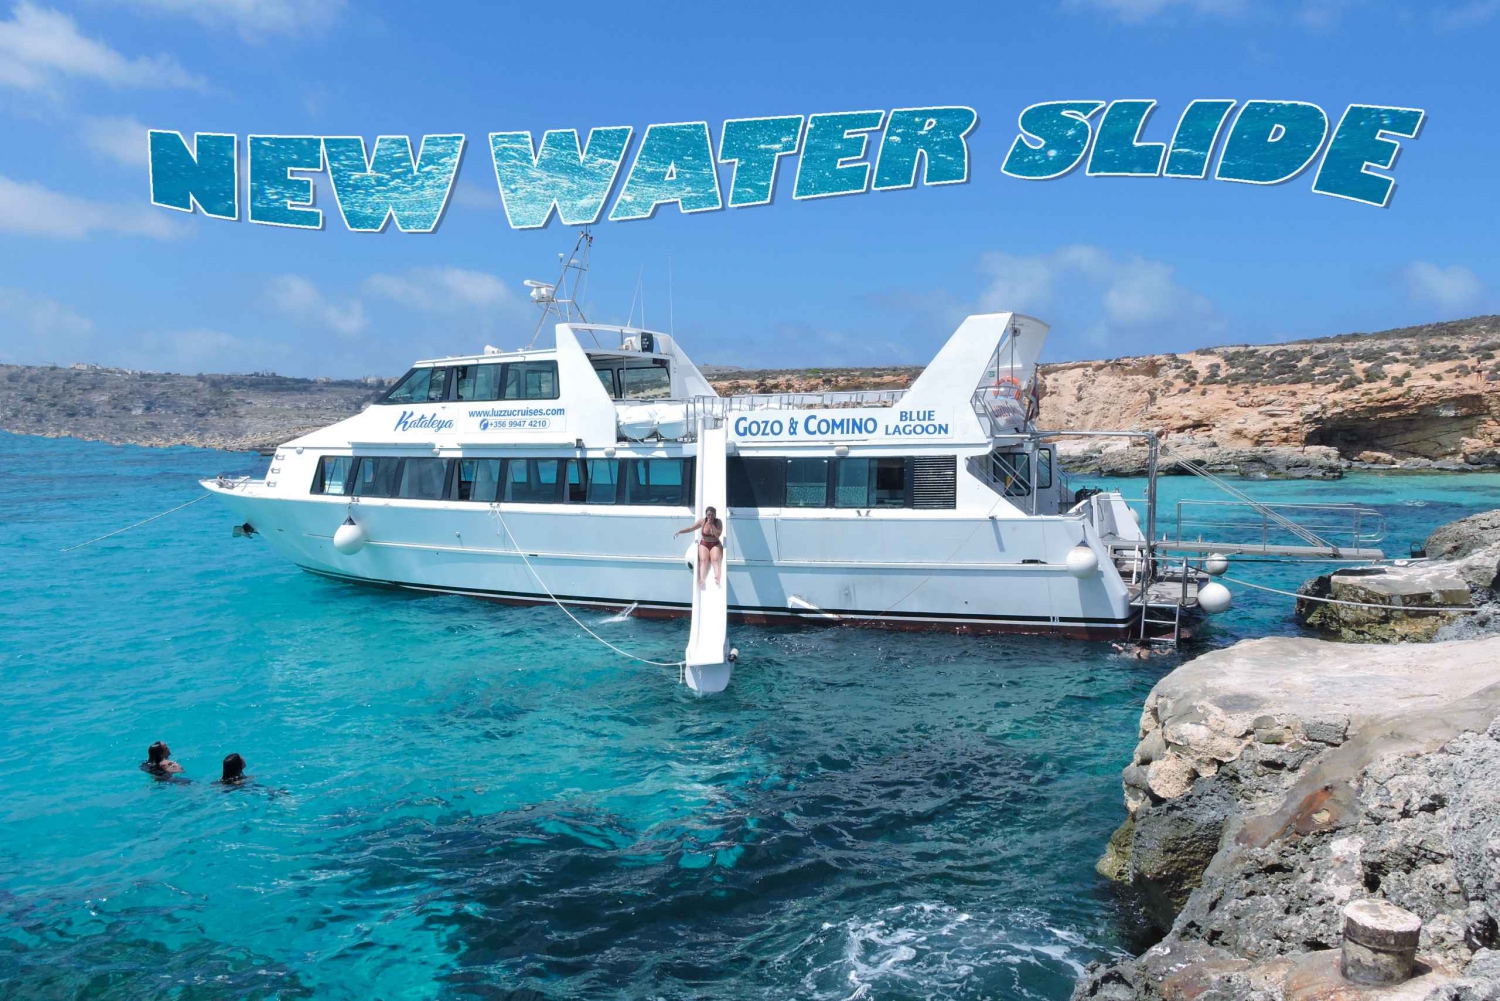 From Sliema: Comino, Crystal Lagoon, and Blue Lagoon Cruise